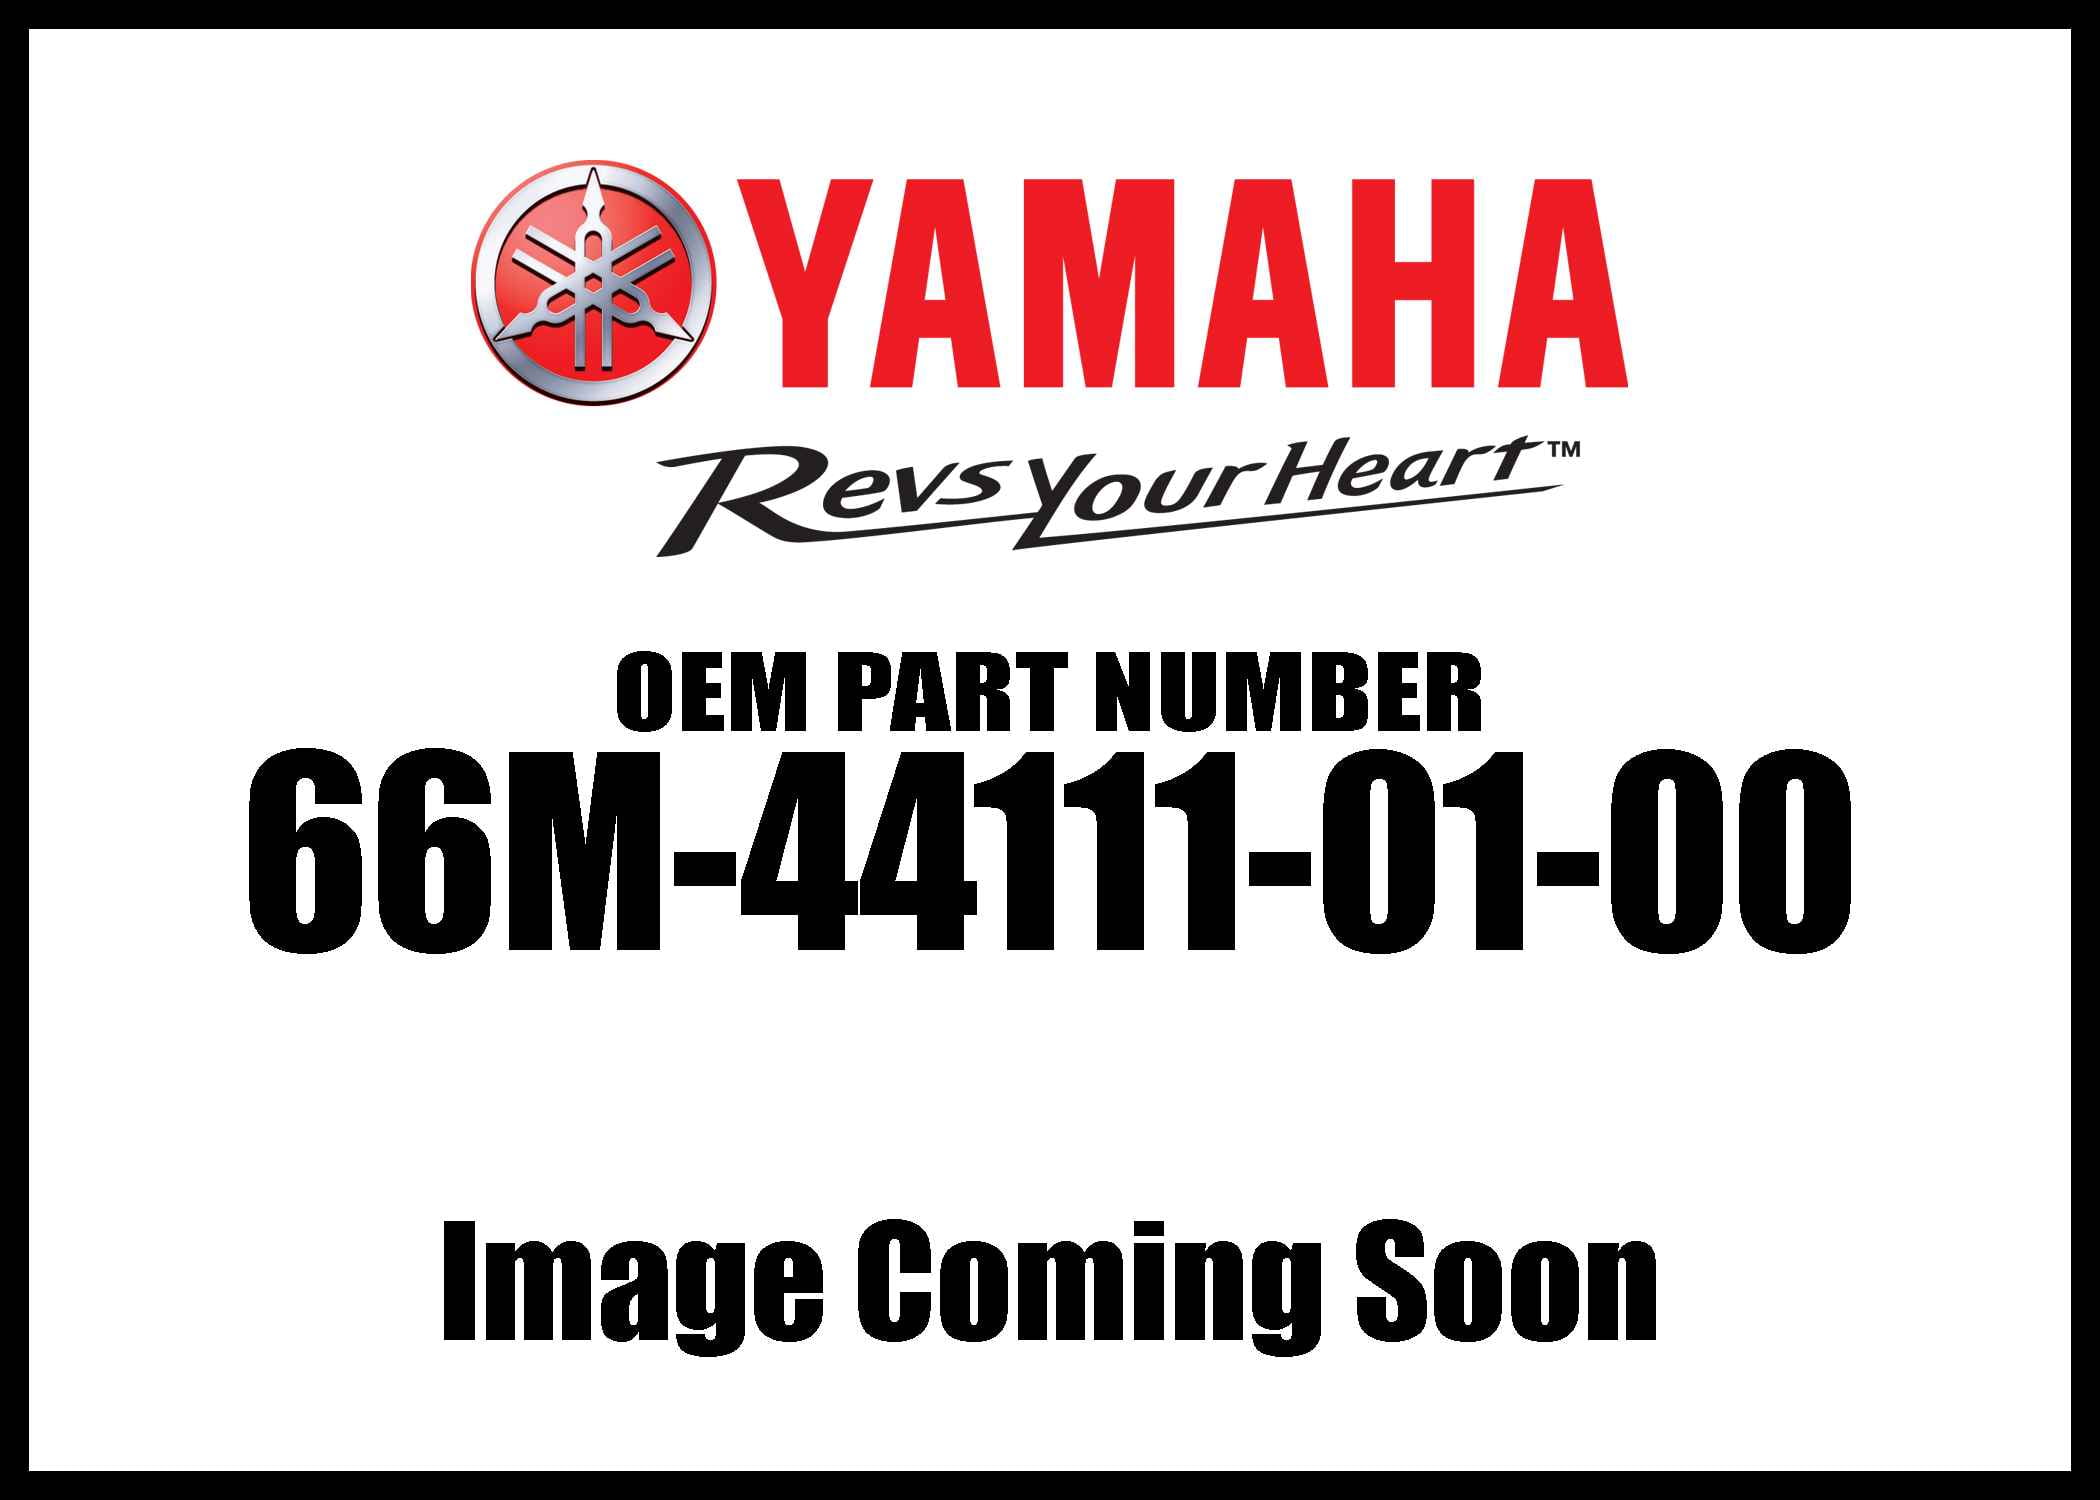 Yamaha Handle Gear Shift 66M-44111-01-00 New Oem